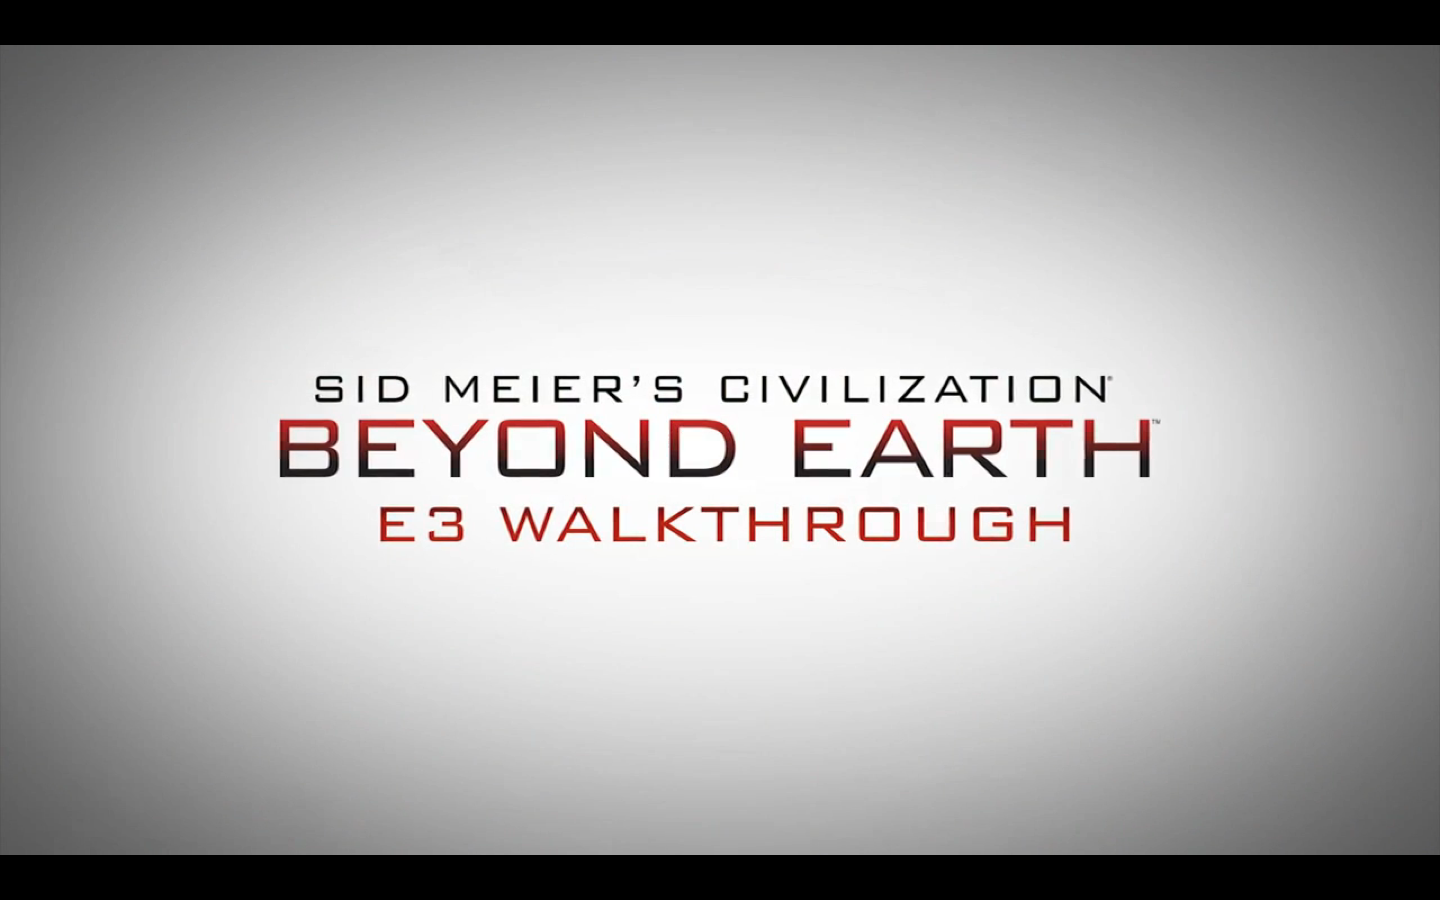 Firaxis Sid Meier Civilization E3 game coverage preview tutorial presents